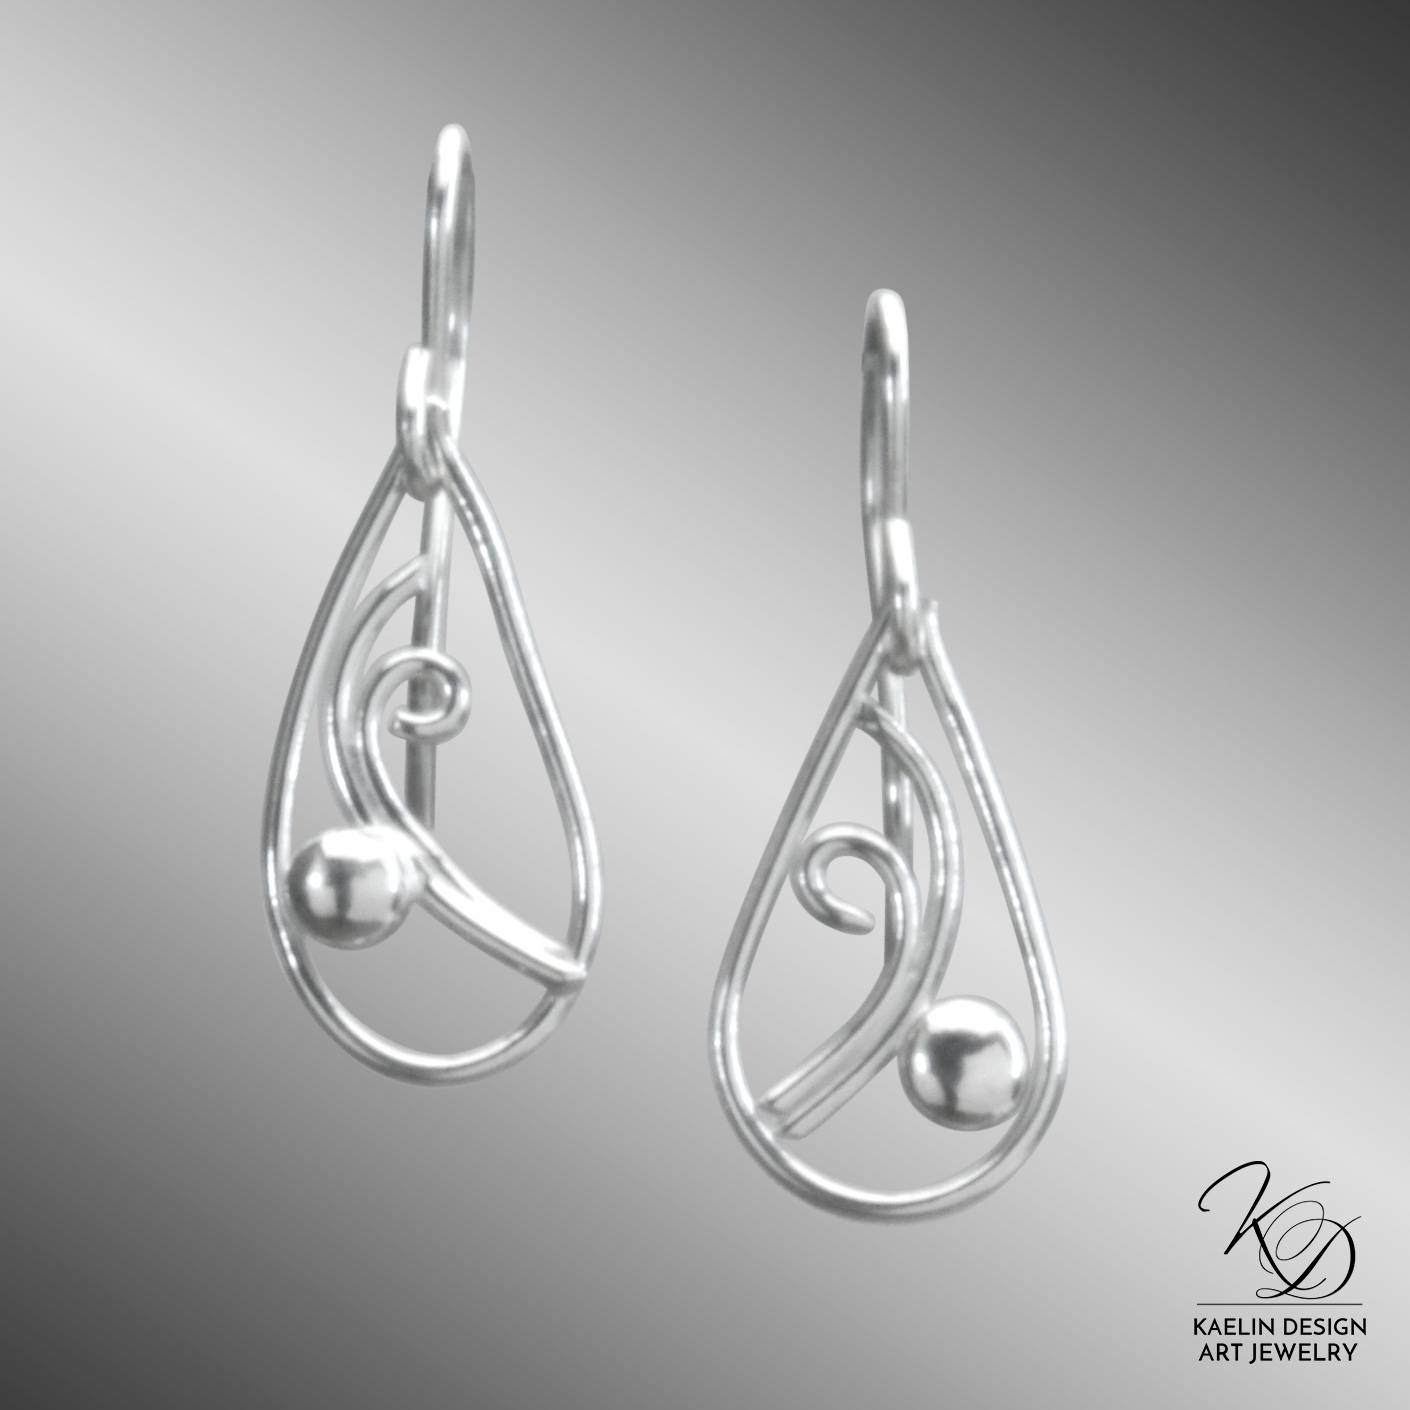 Laguna Hand Forged Sterling Silver Earrings by Kaelin Design Fine Art Jewelry